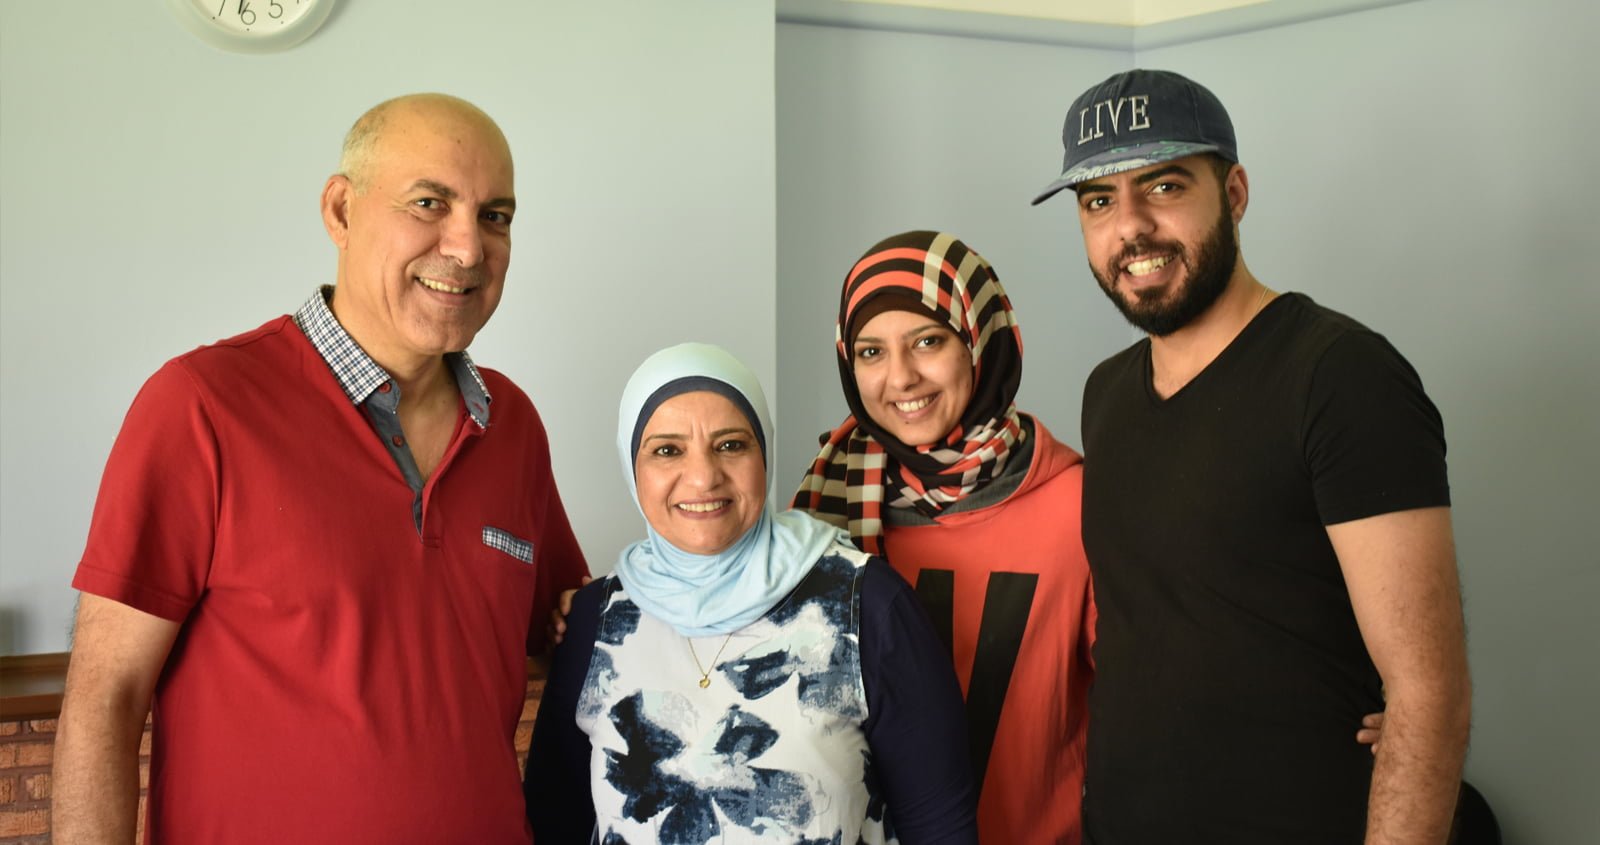 Four members of the Al Janabi family smiling